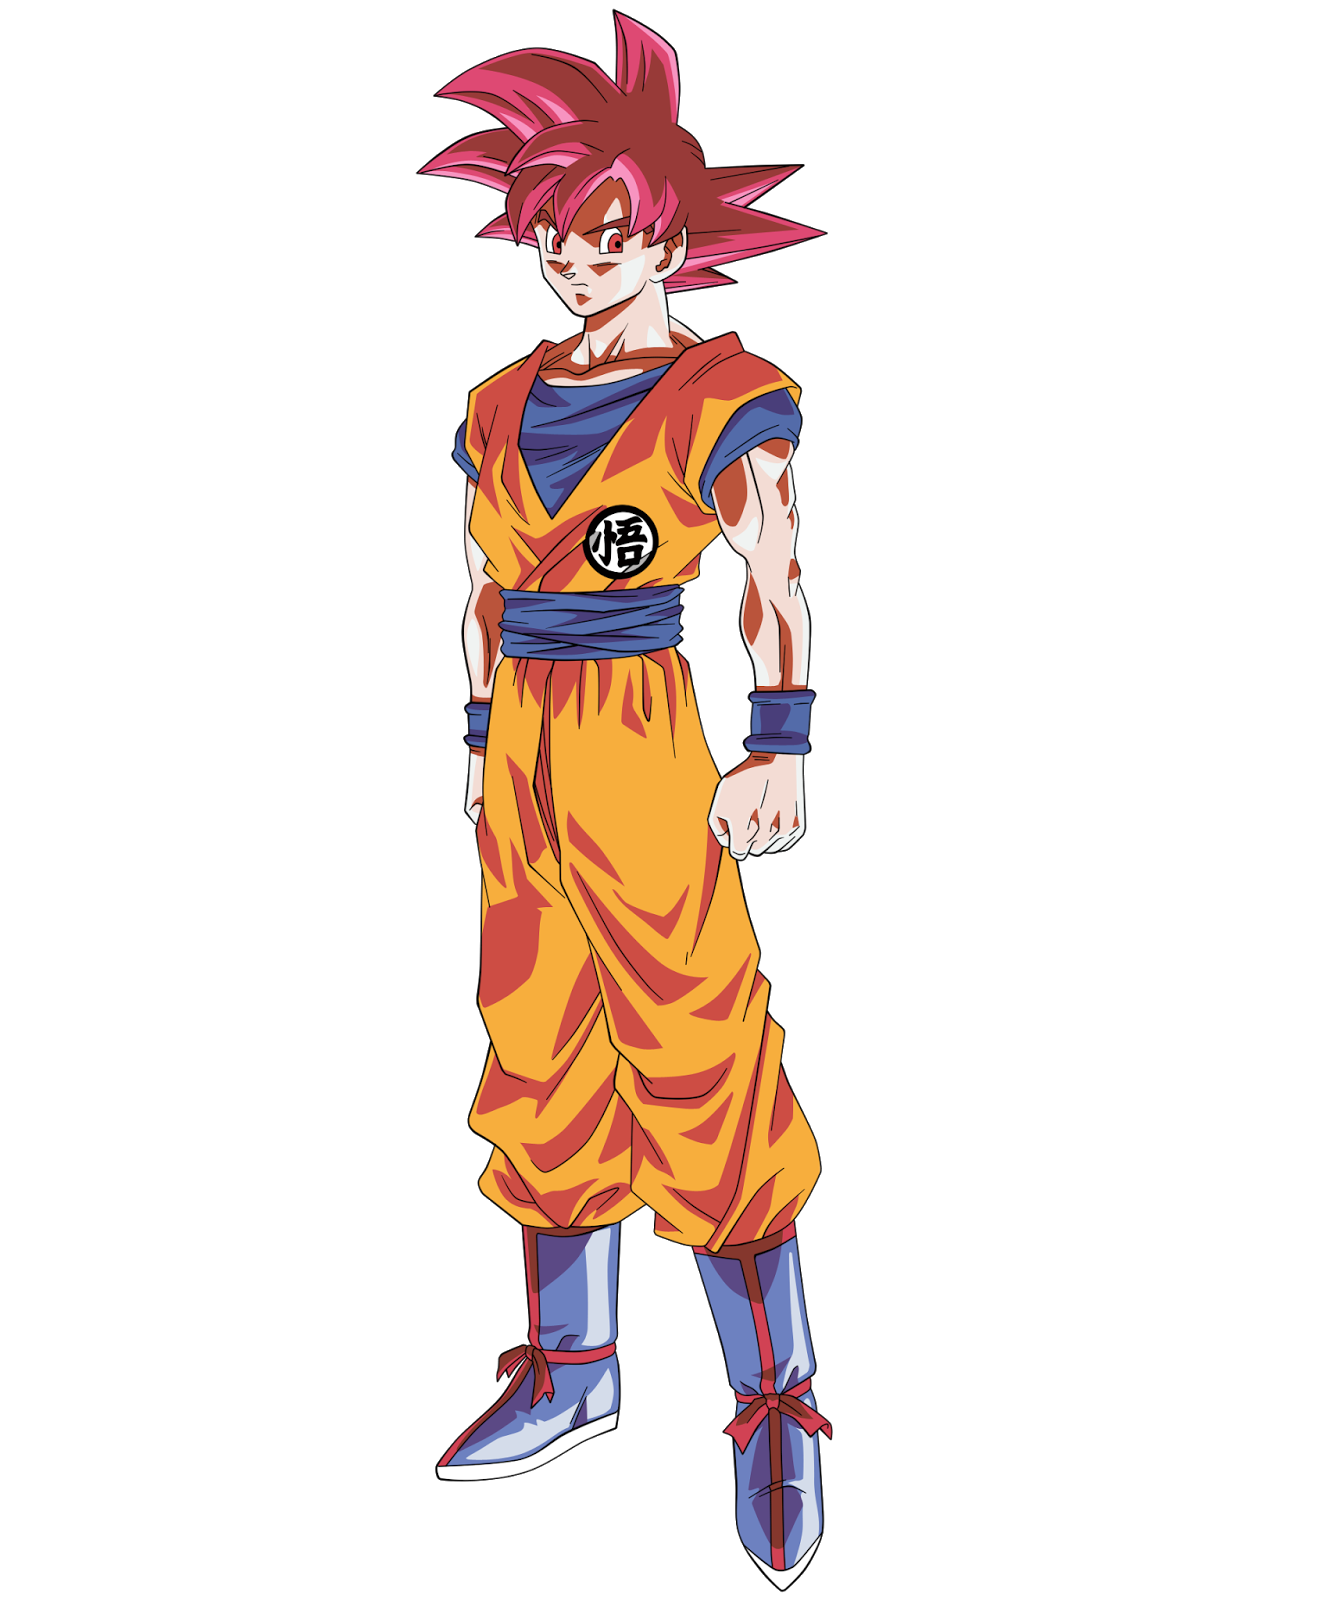 Images for Deus Super Saiyajin Goku Em Dragon Ball - Deus Super Saiyajin Goku Em Dragon Ball